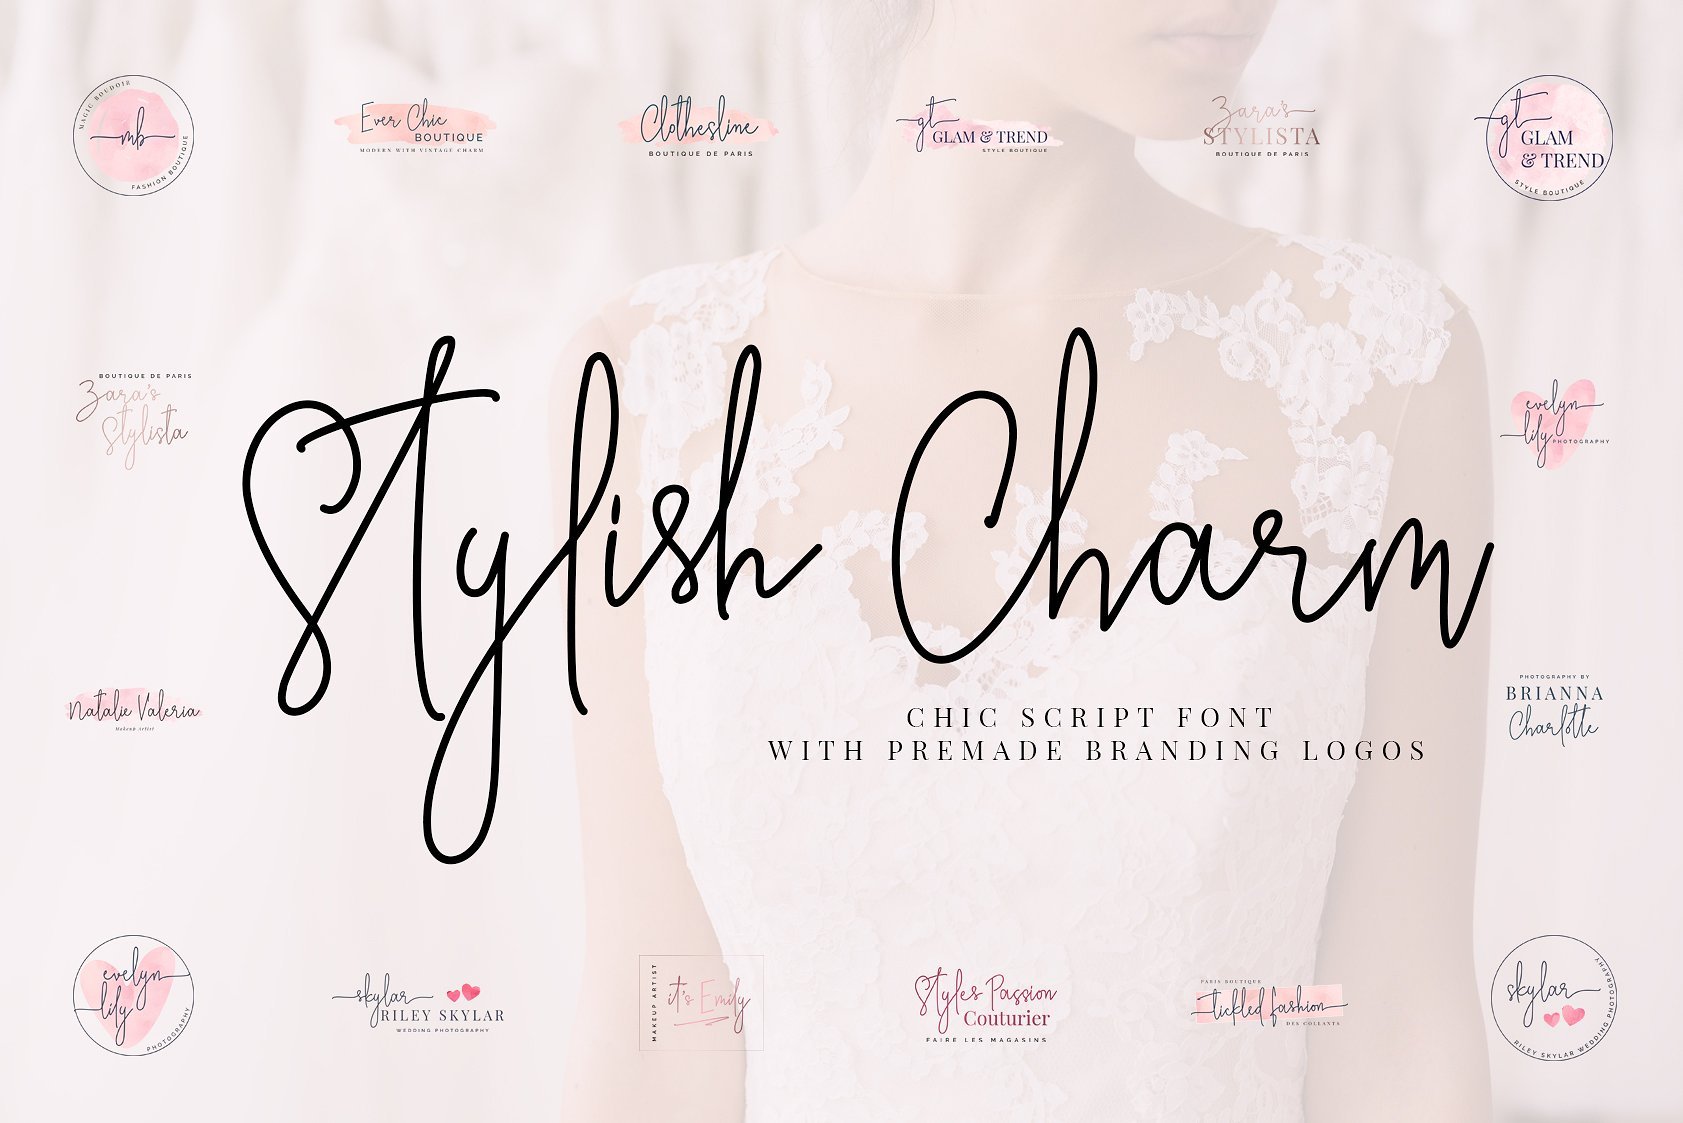 Stylish Charm Brand & Logotype Font